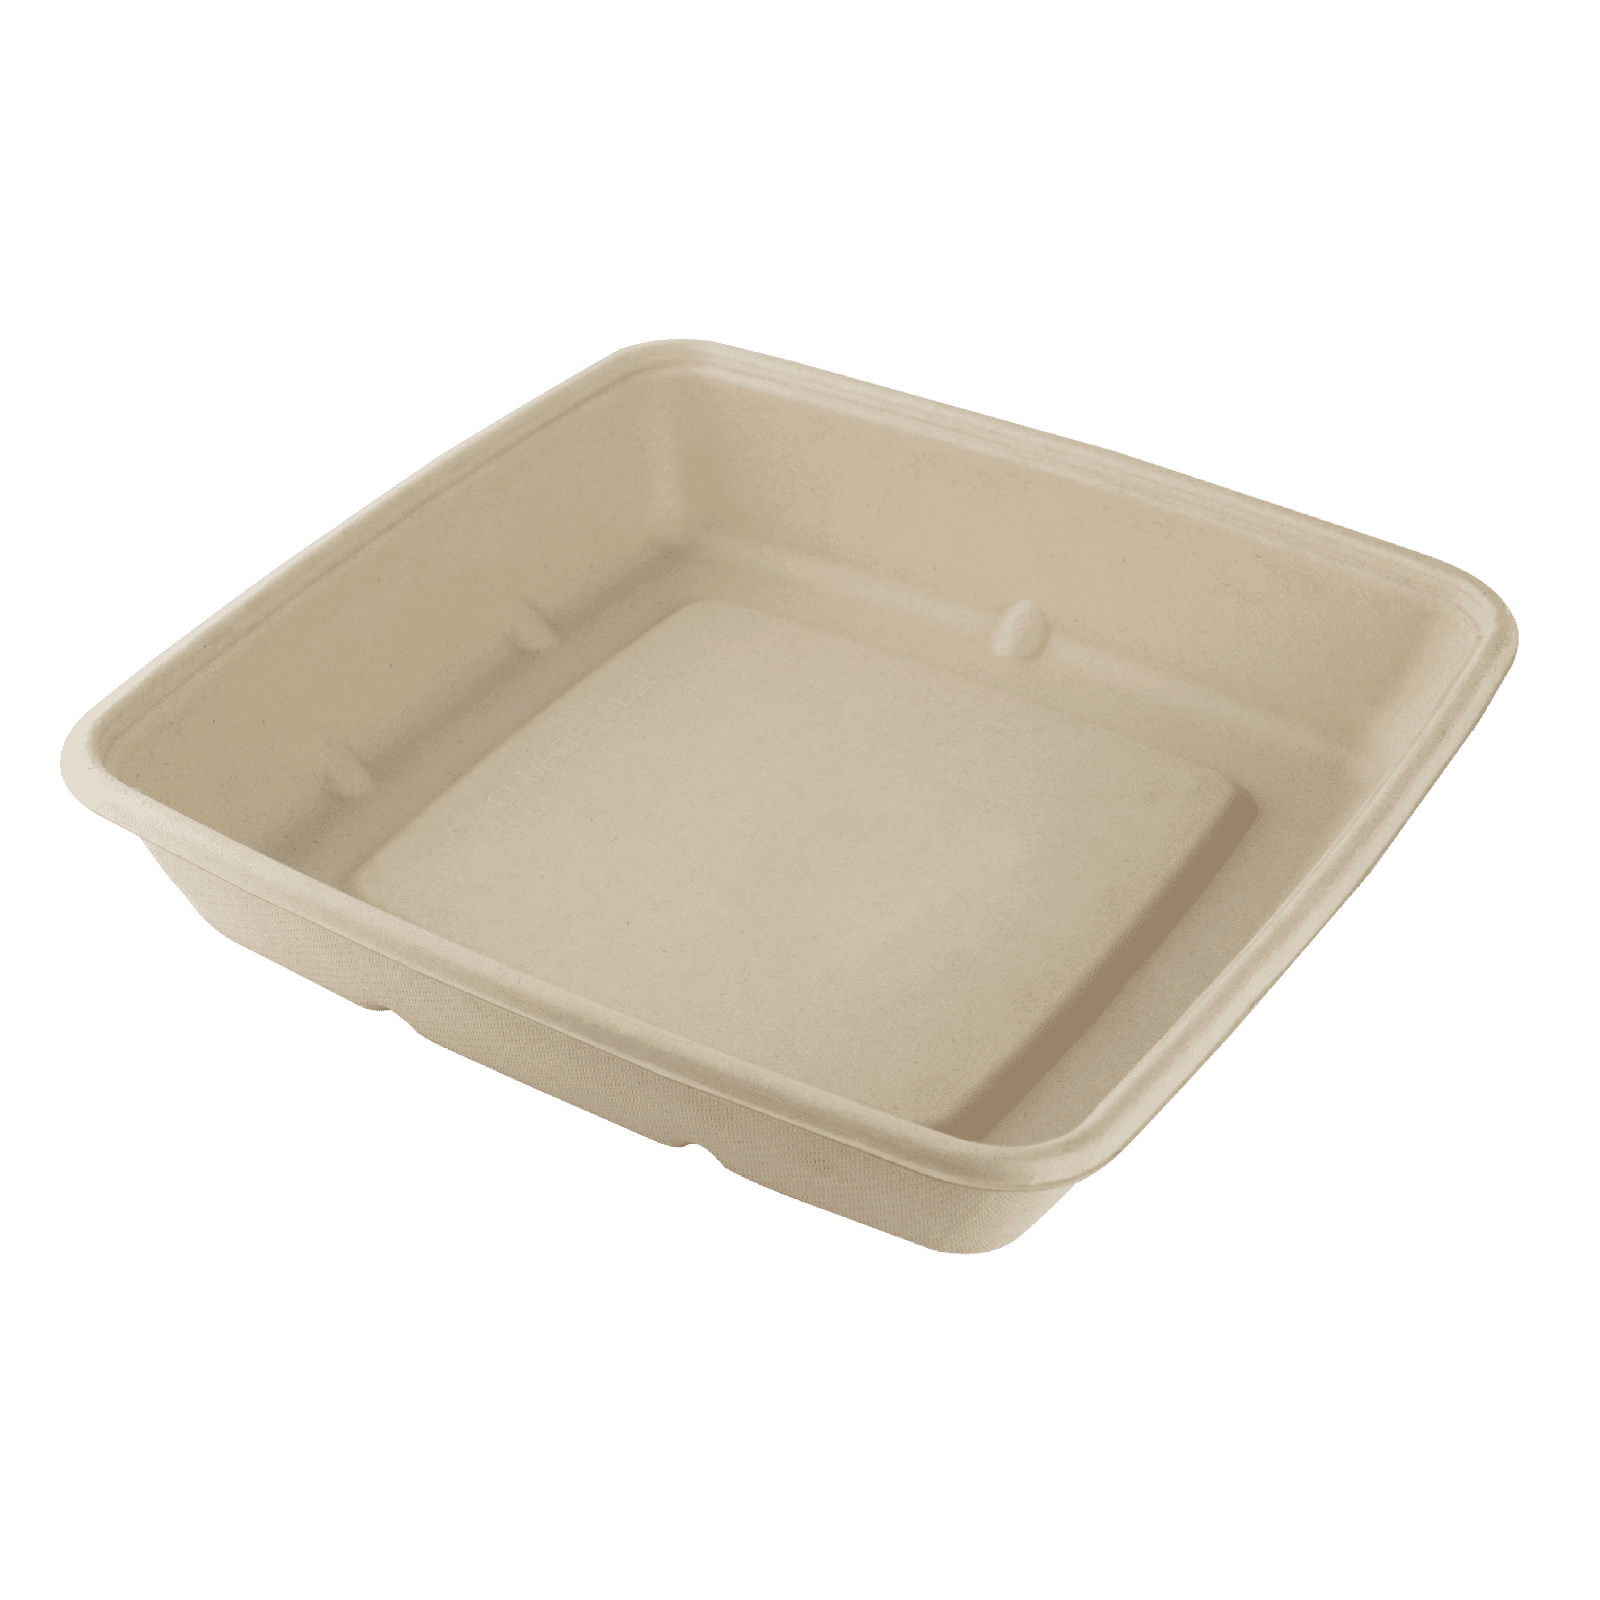 Enpak compostable food packaging square 1400ml 1 compartment CS-1400